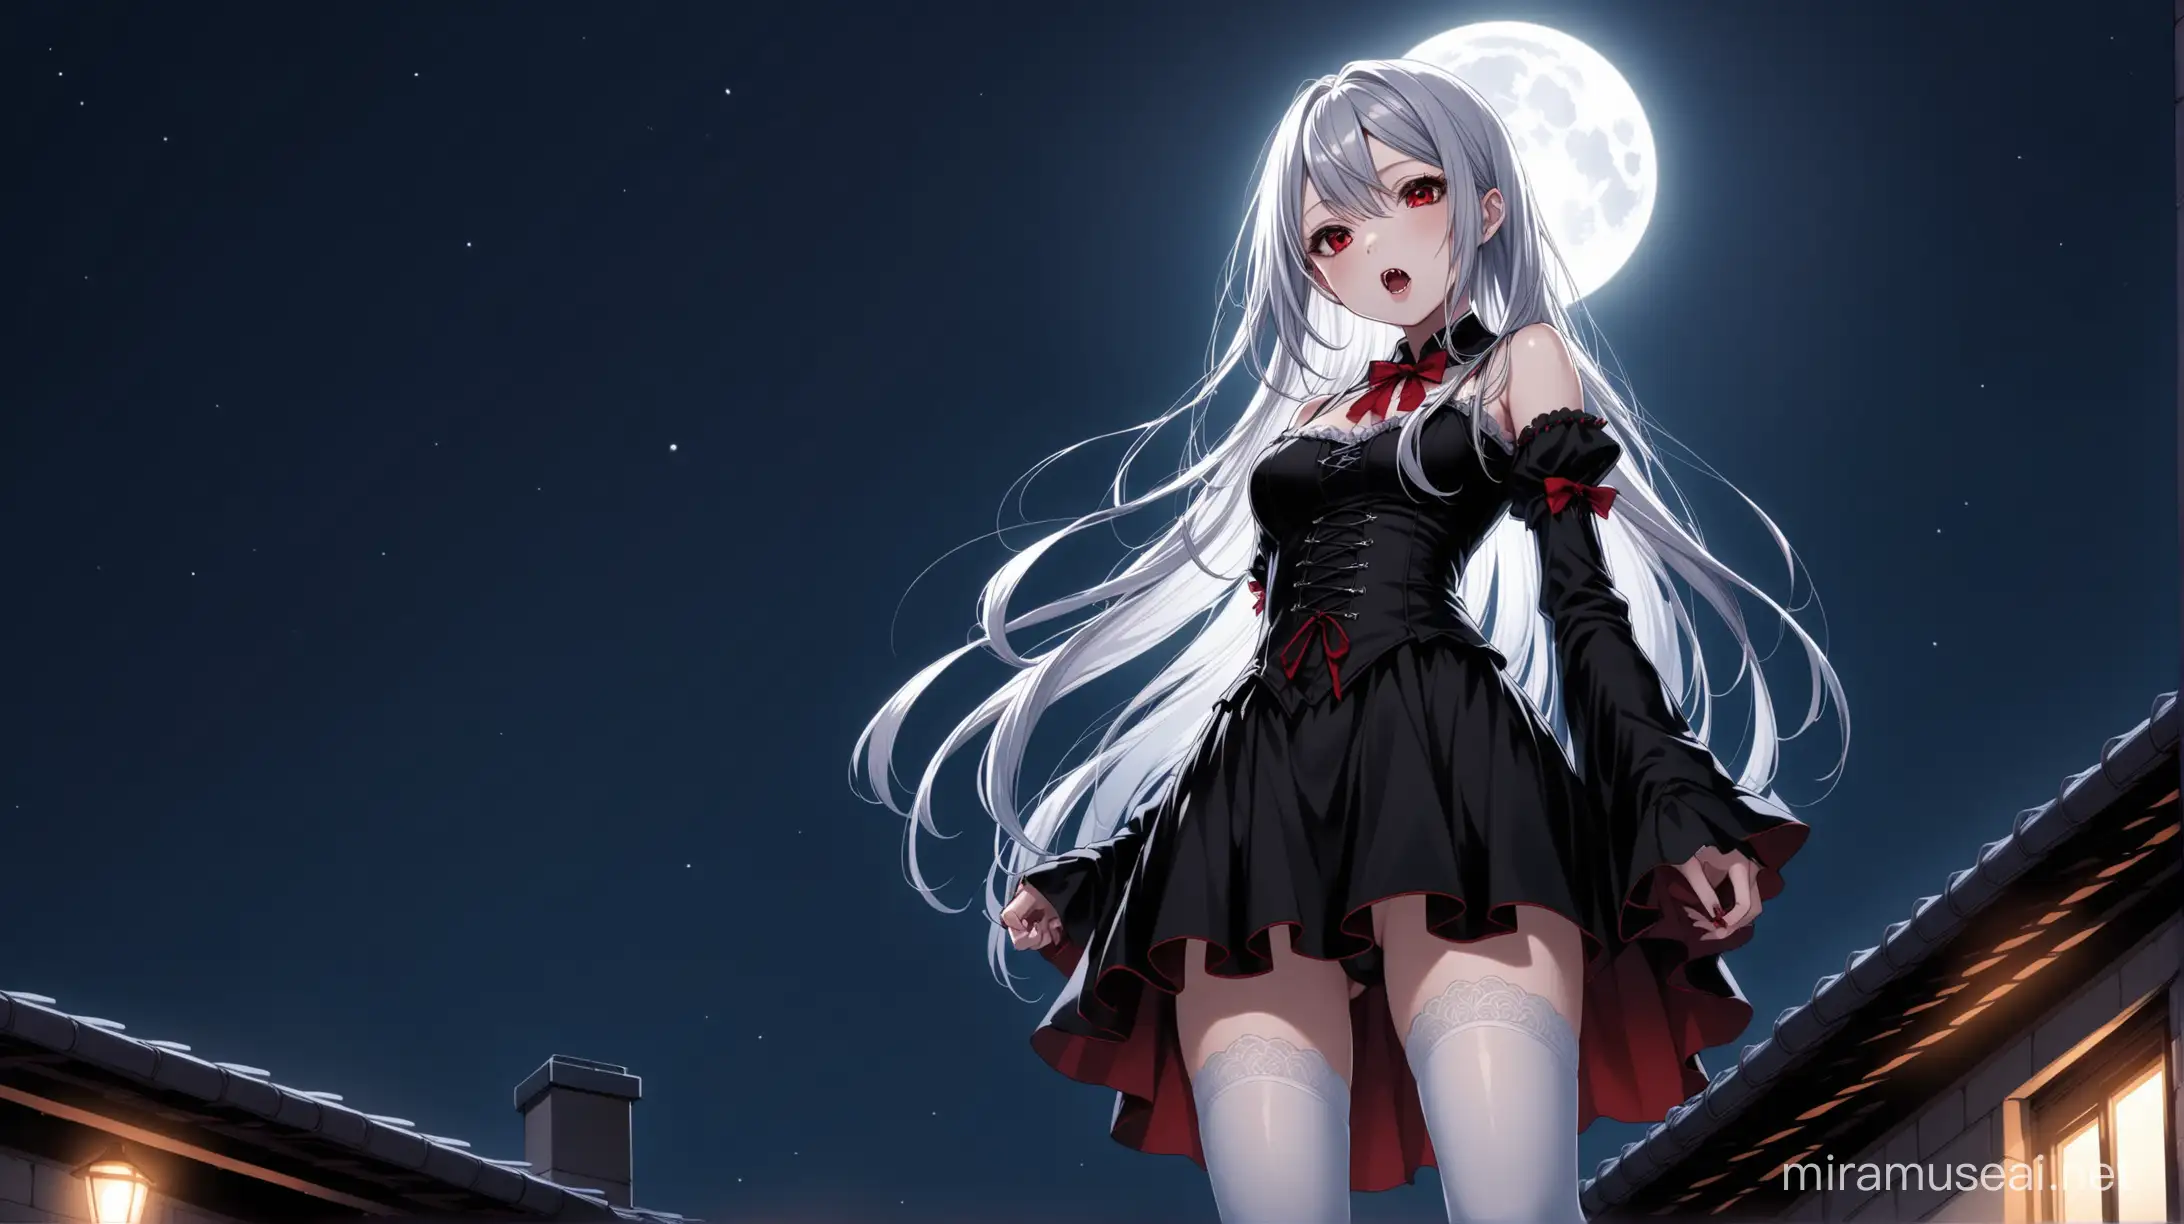 Enigmatic Vampire Girl on Rooftop Under Moonlight